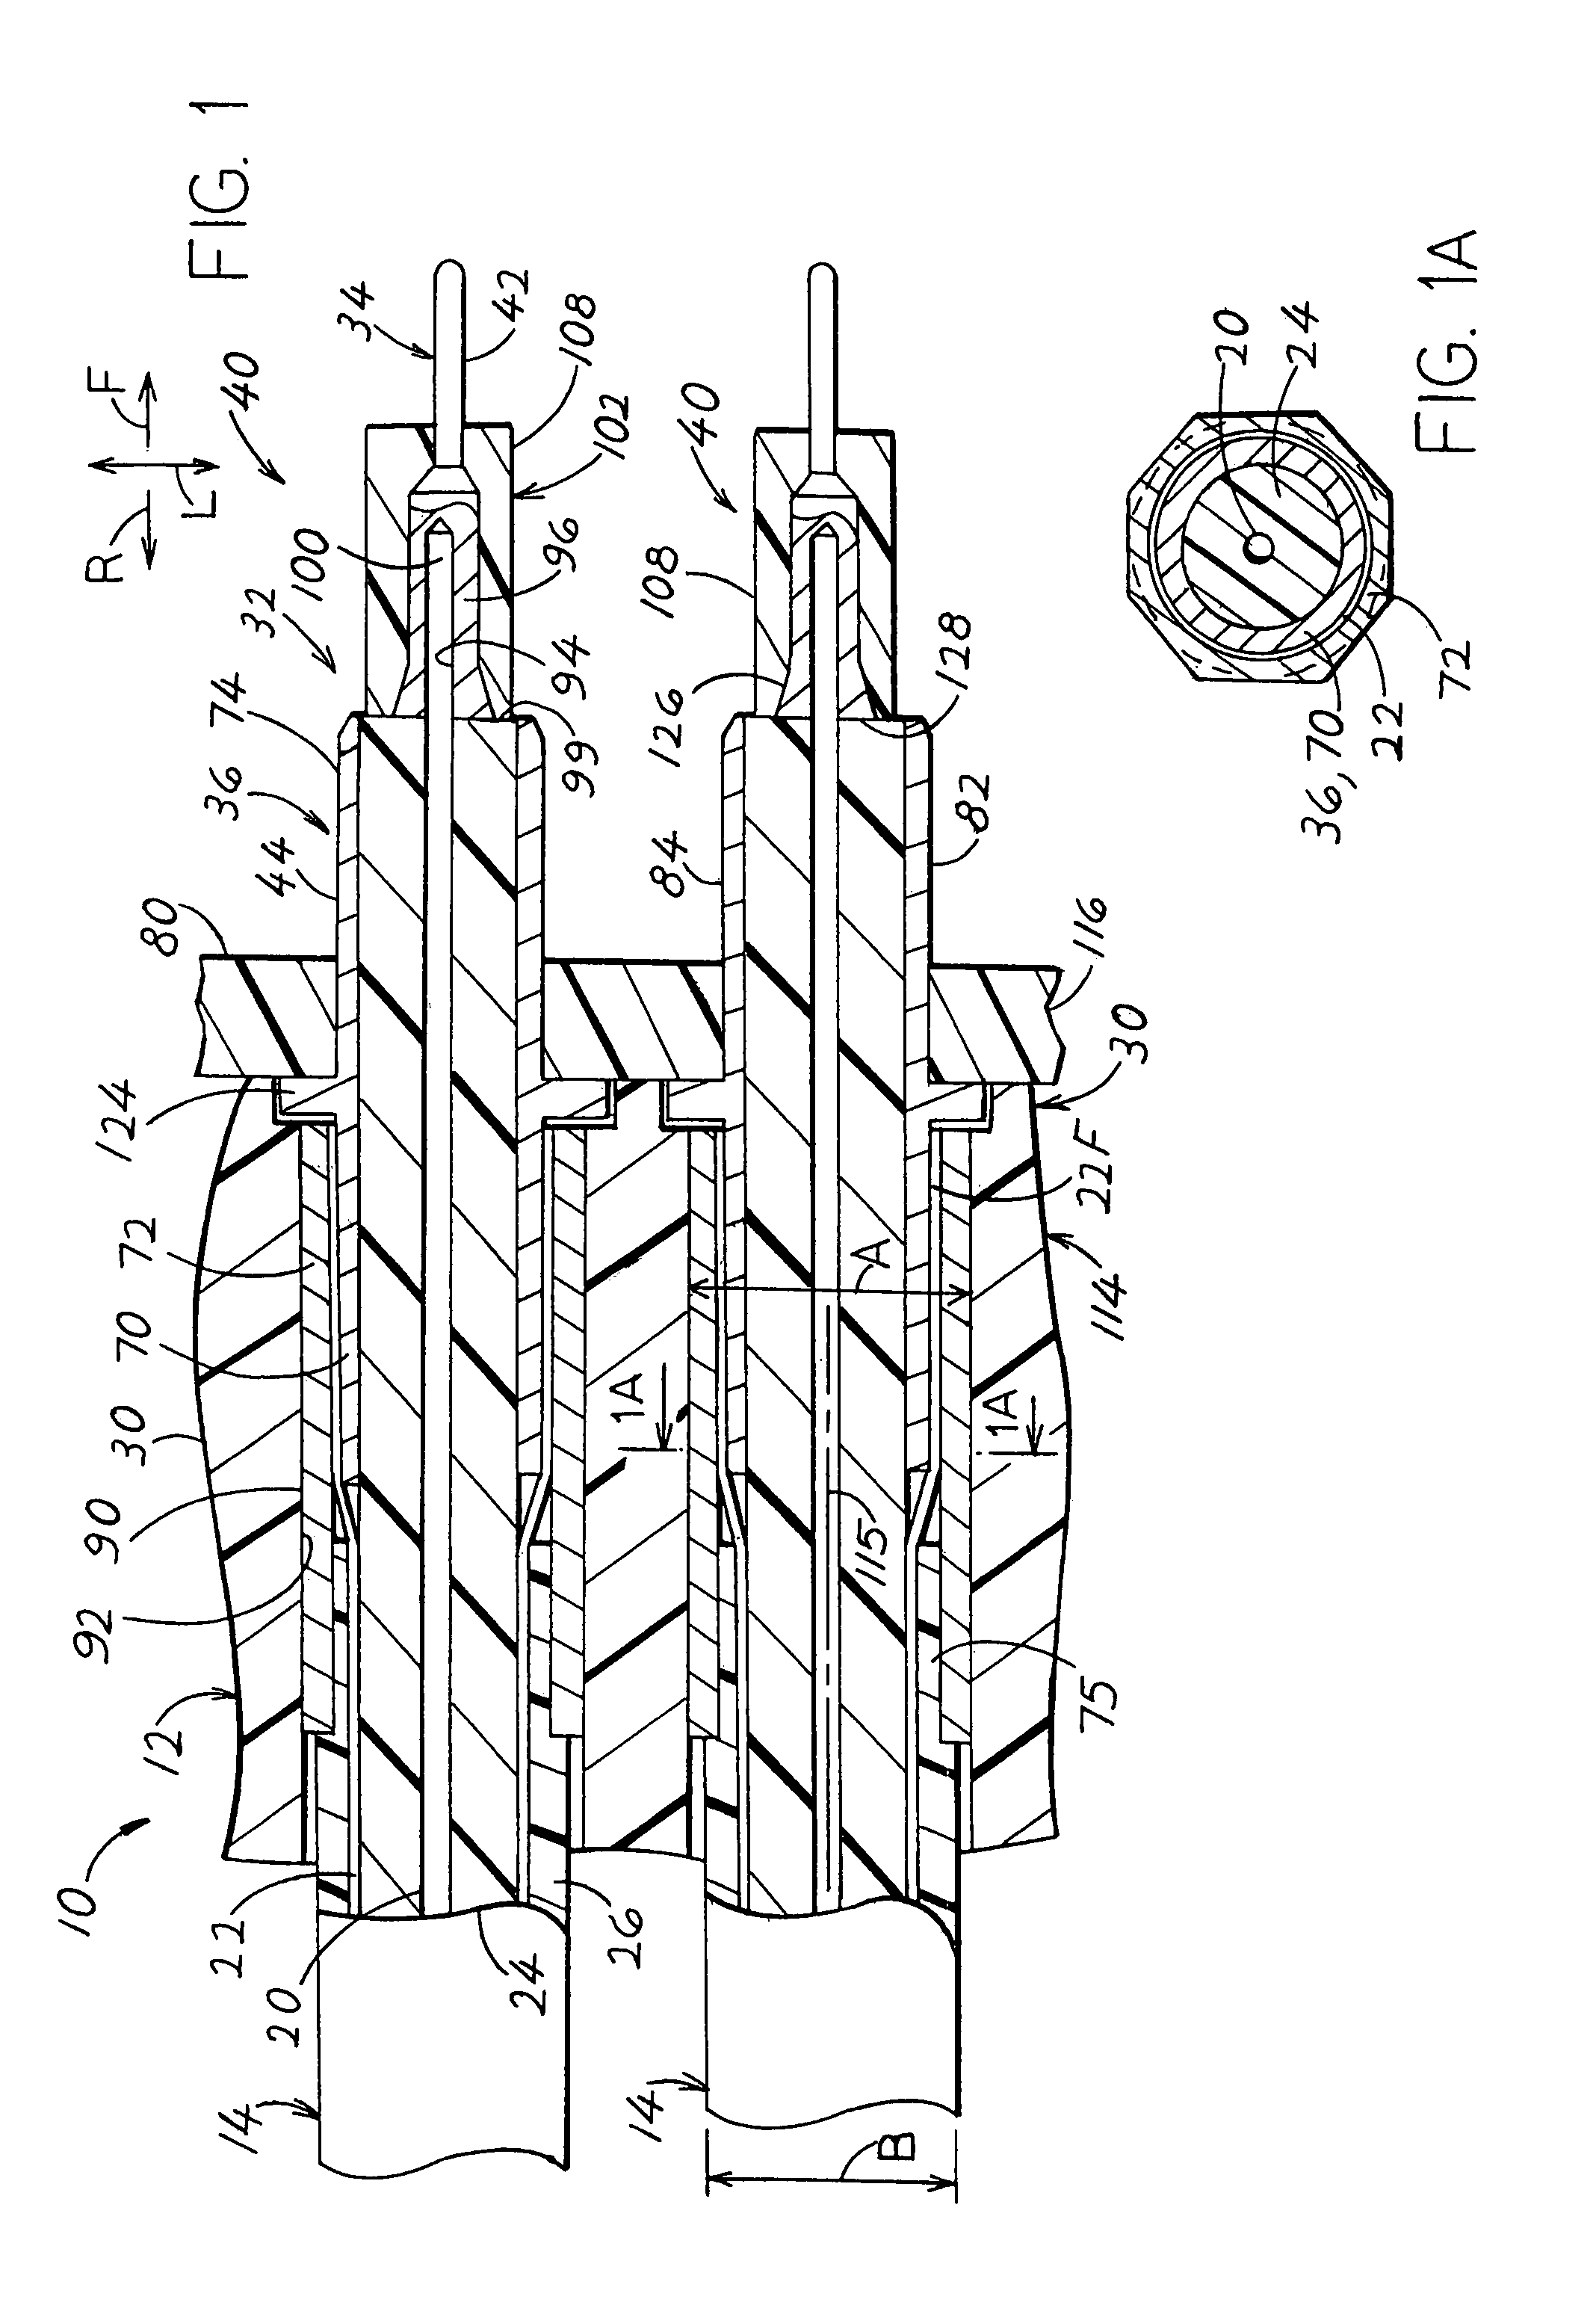 High density RF connector system